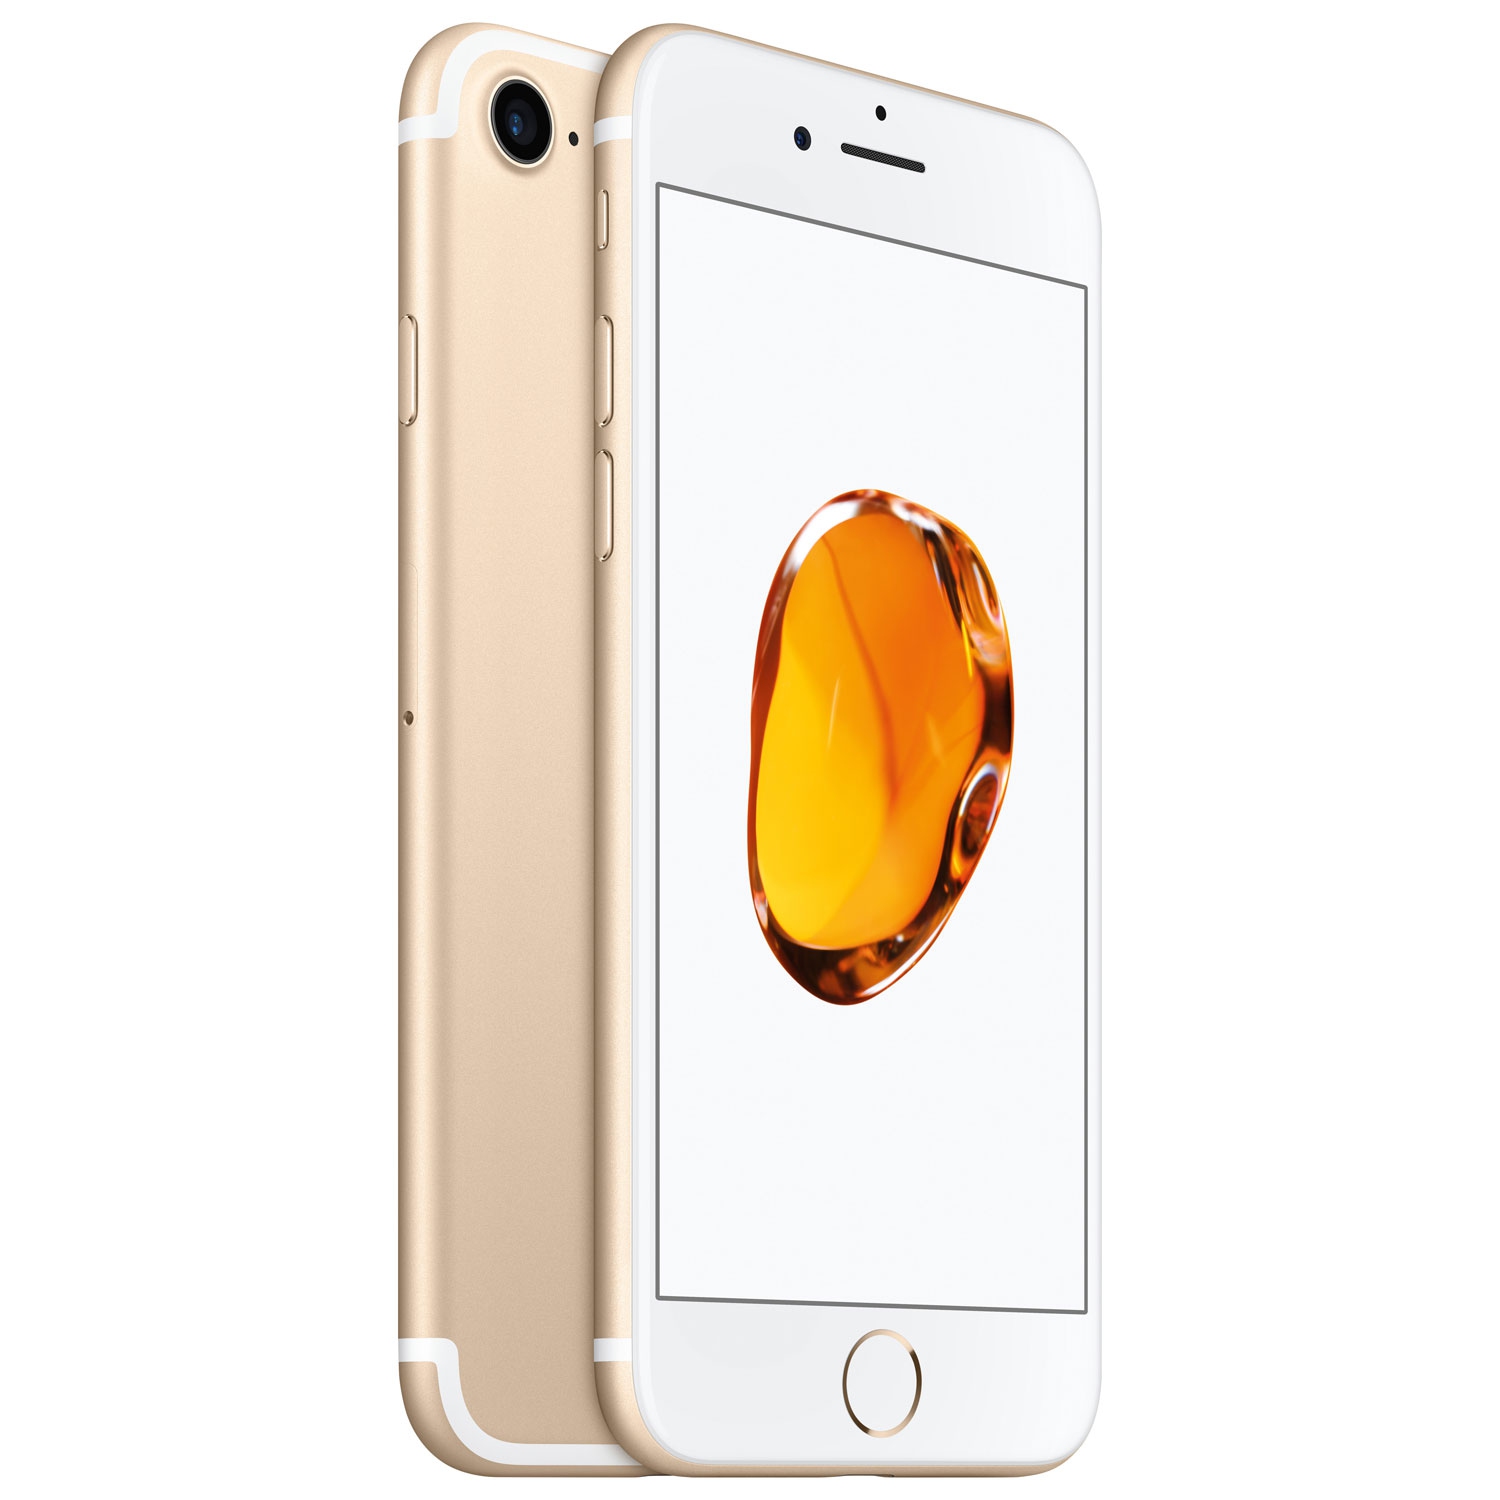 Apple iPhone 7 32GB Smartphone - Gold - Unlocked - Open Box